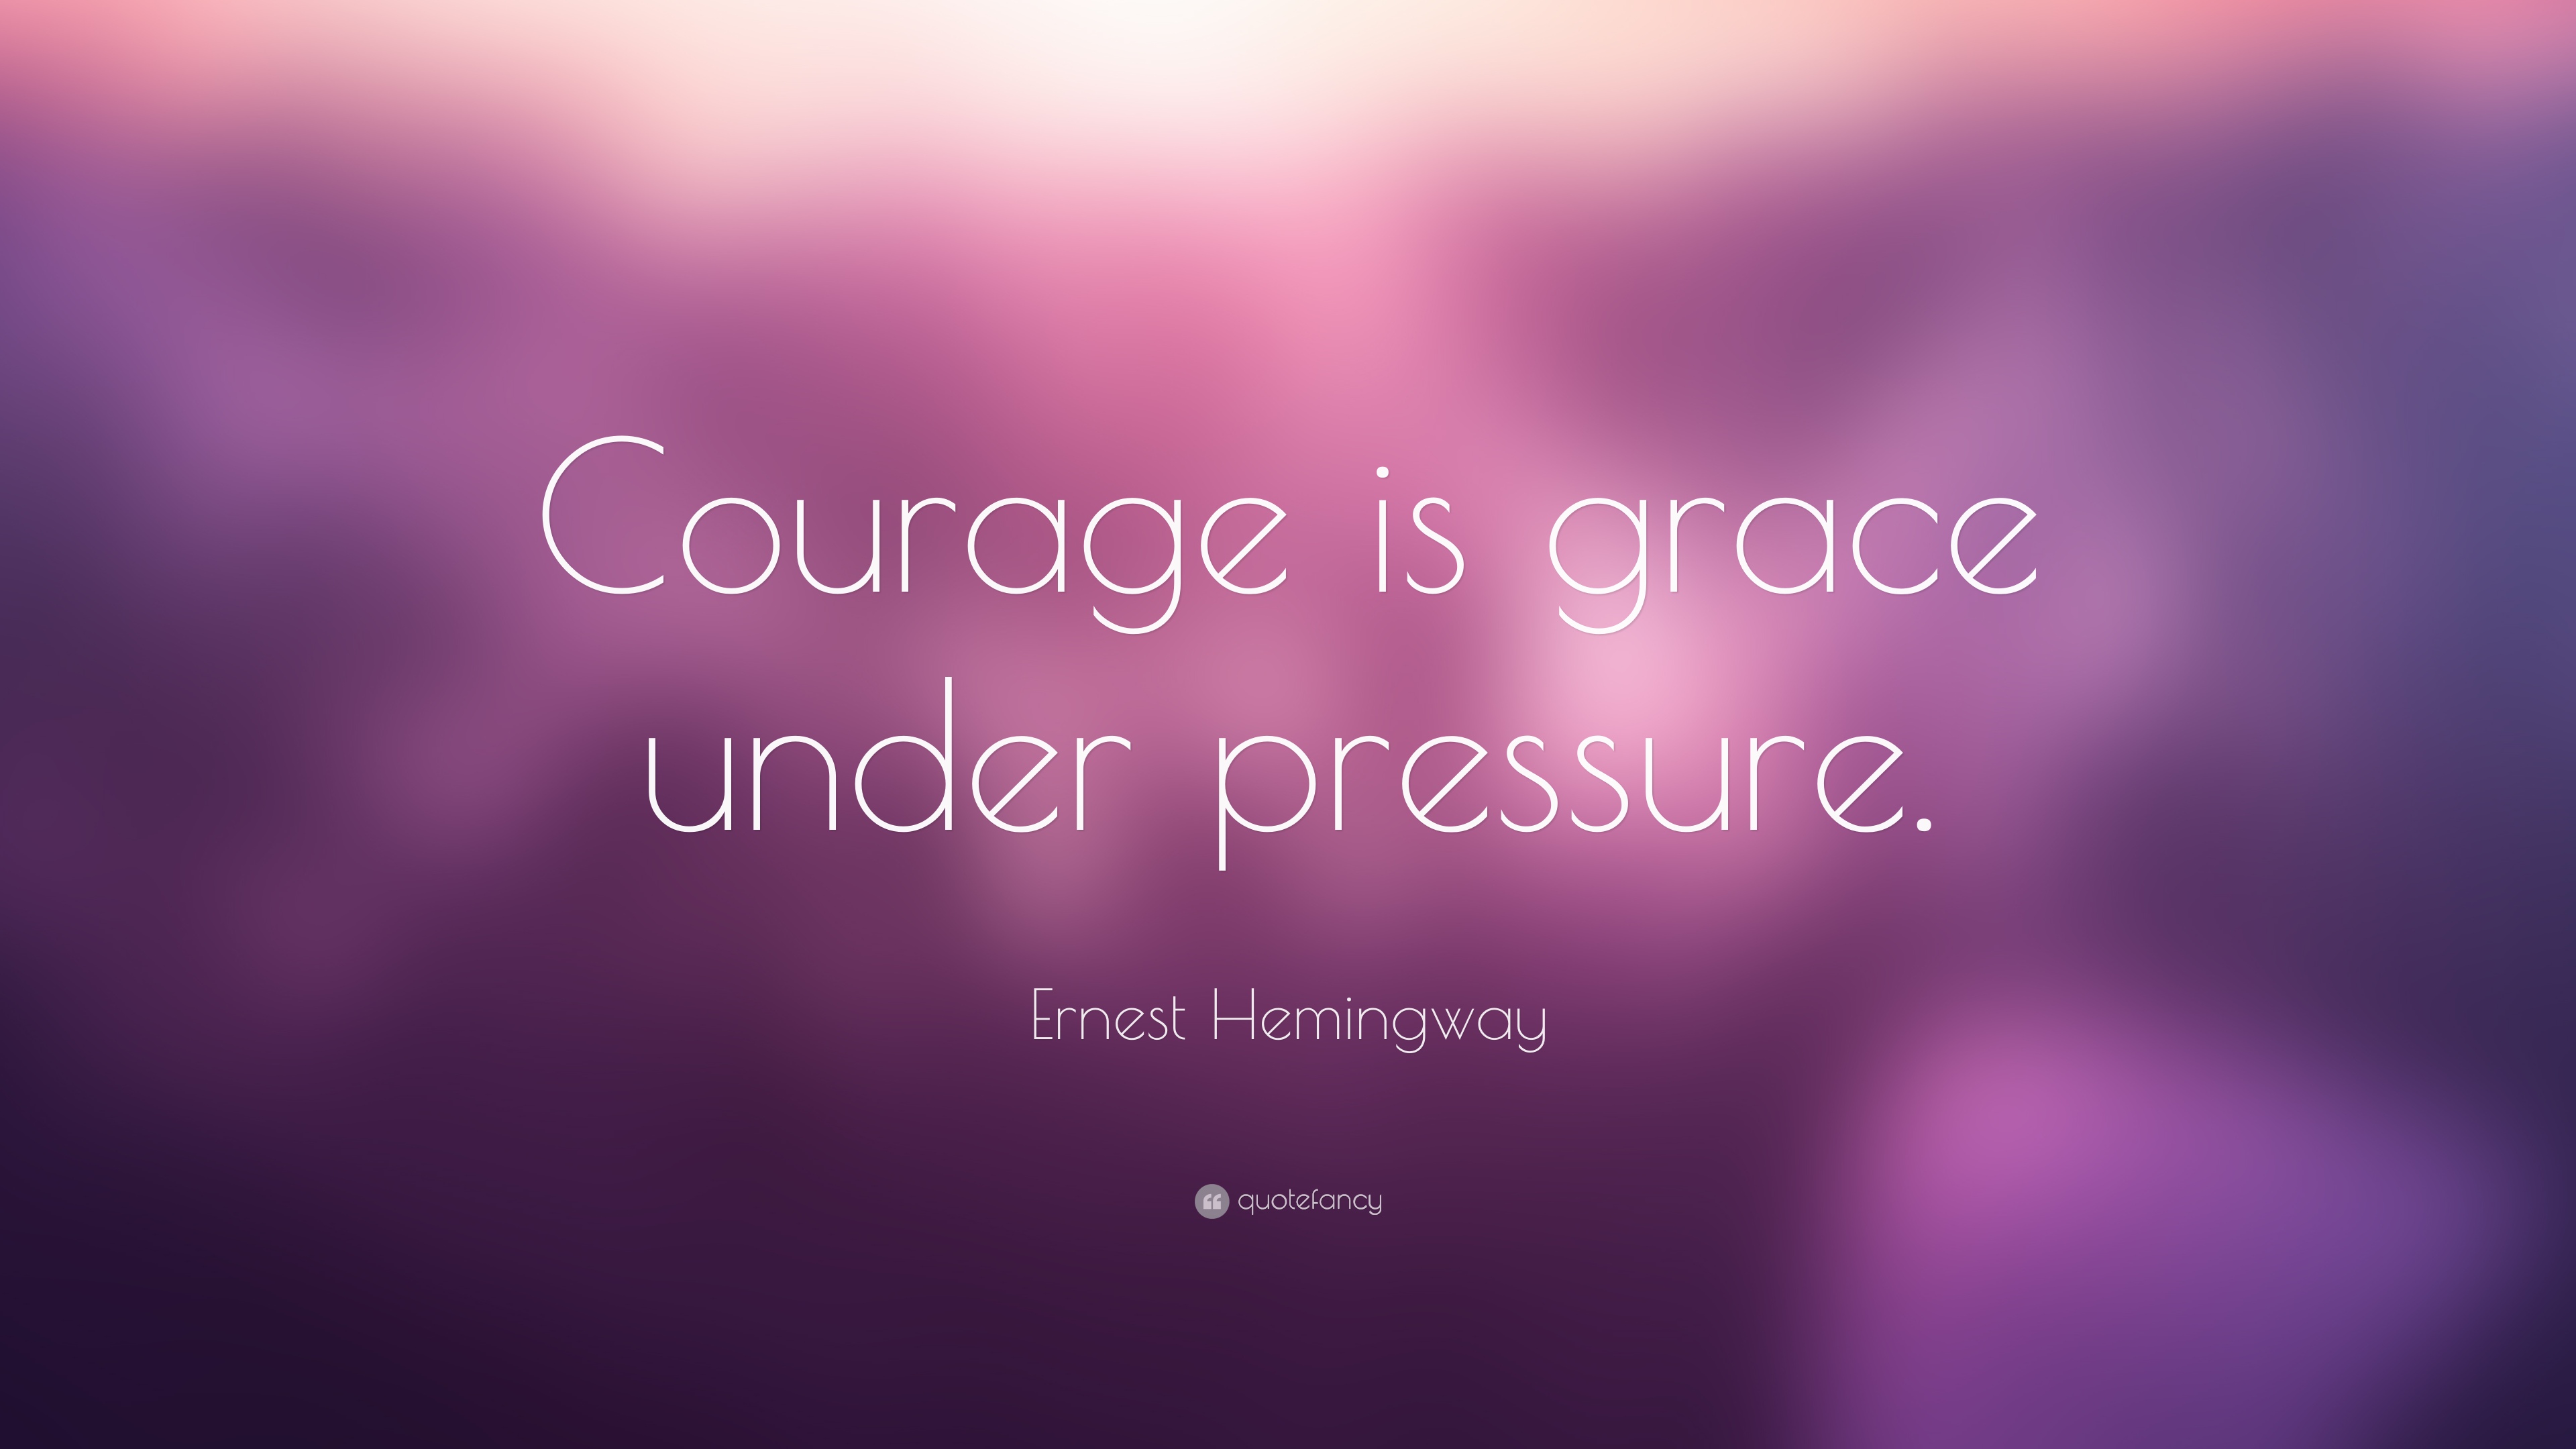 Ernest Hemingway Quote: “Courage is grace under pressure.” (9 ...